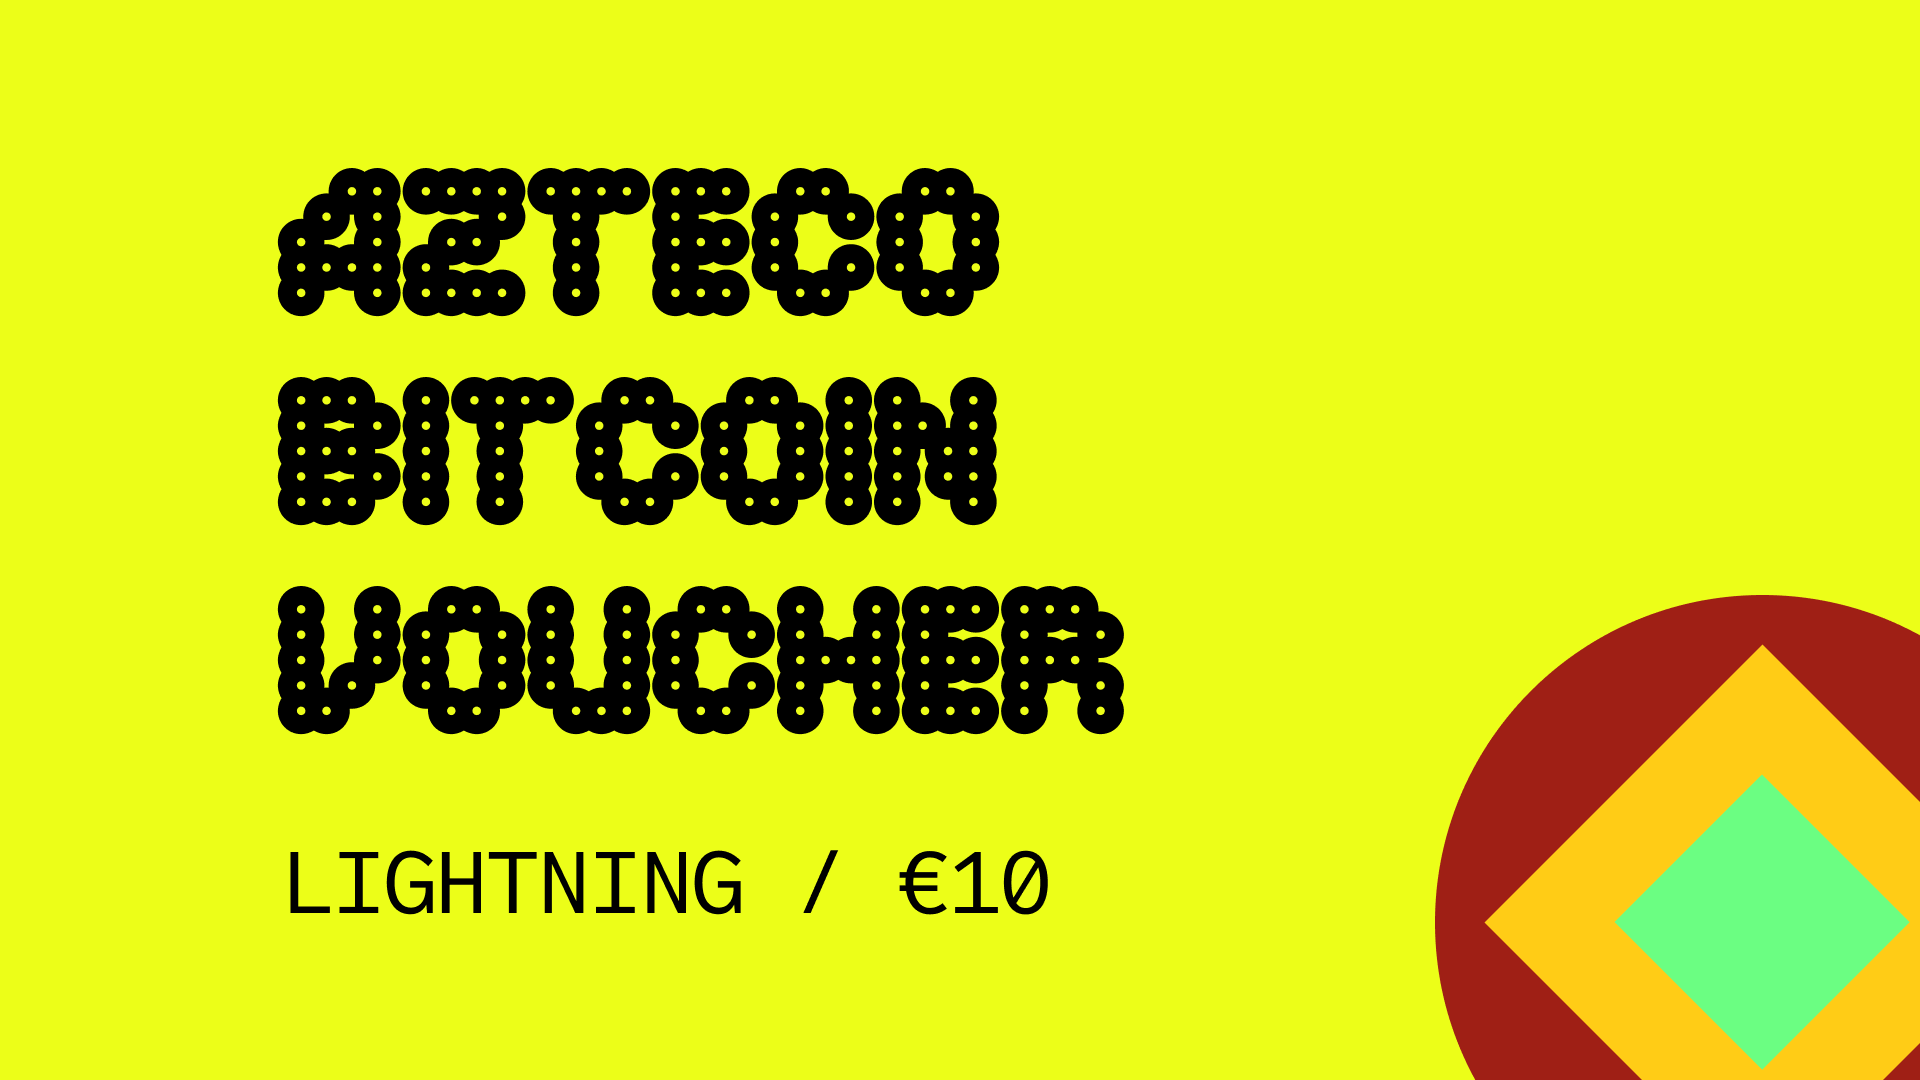 Azteco Bitcoin Lighting €10 Voucher, 11.3$